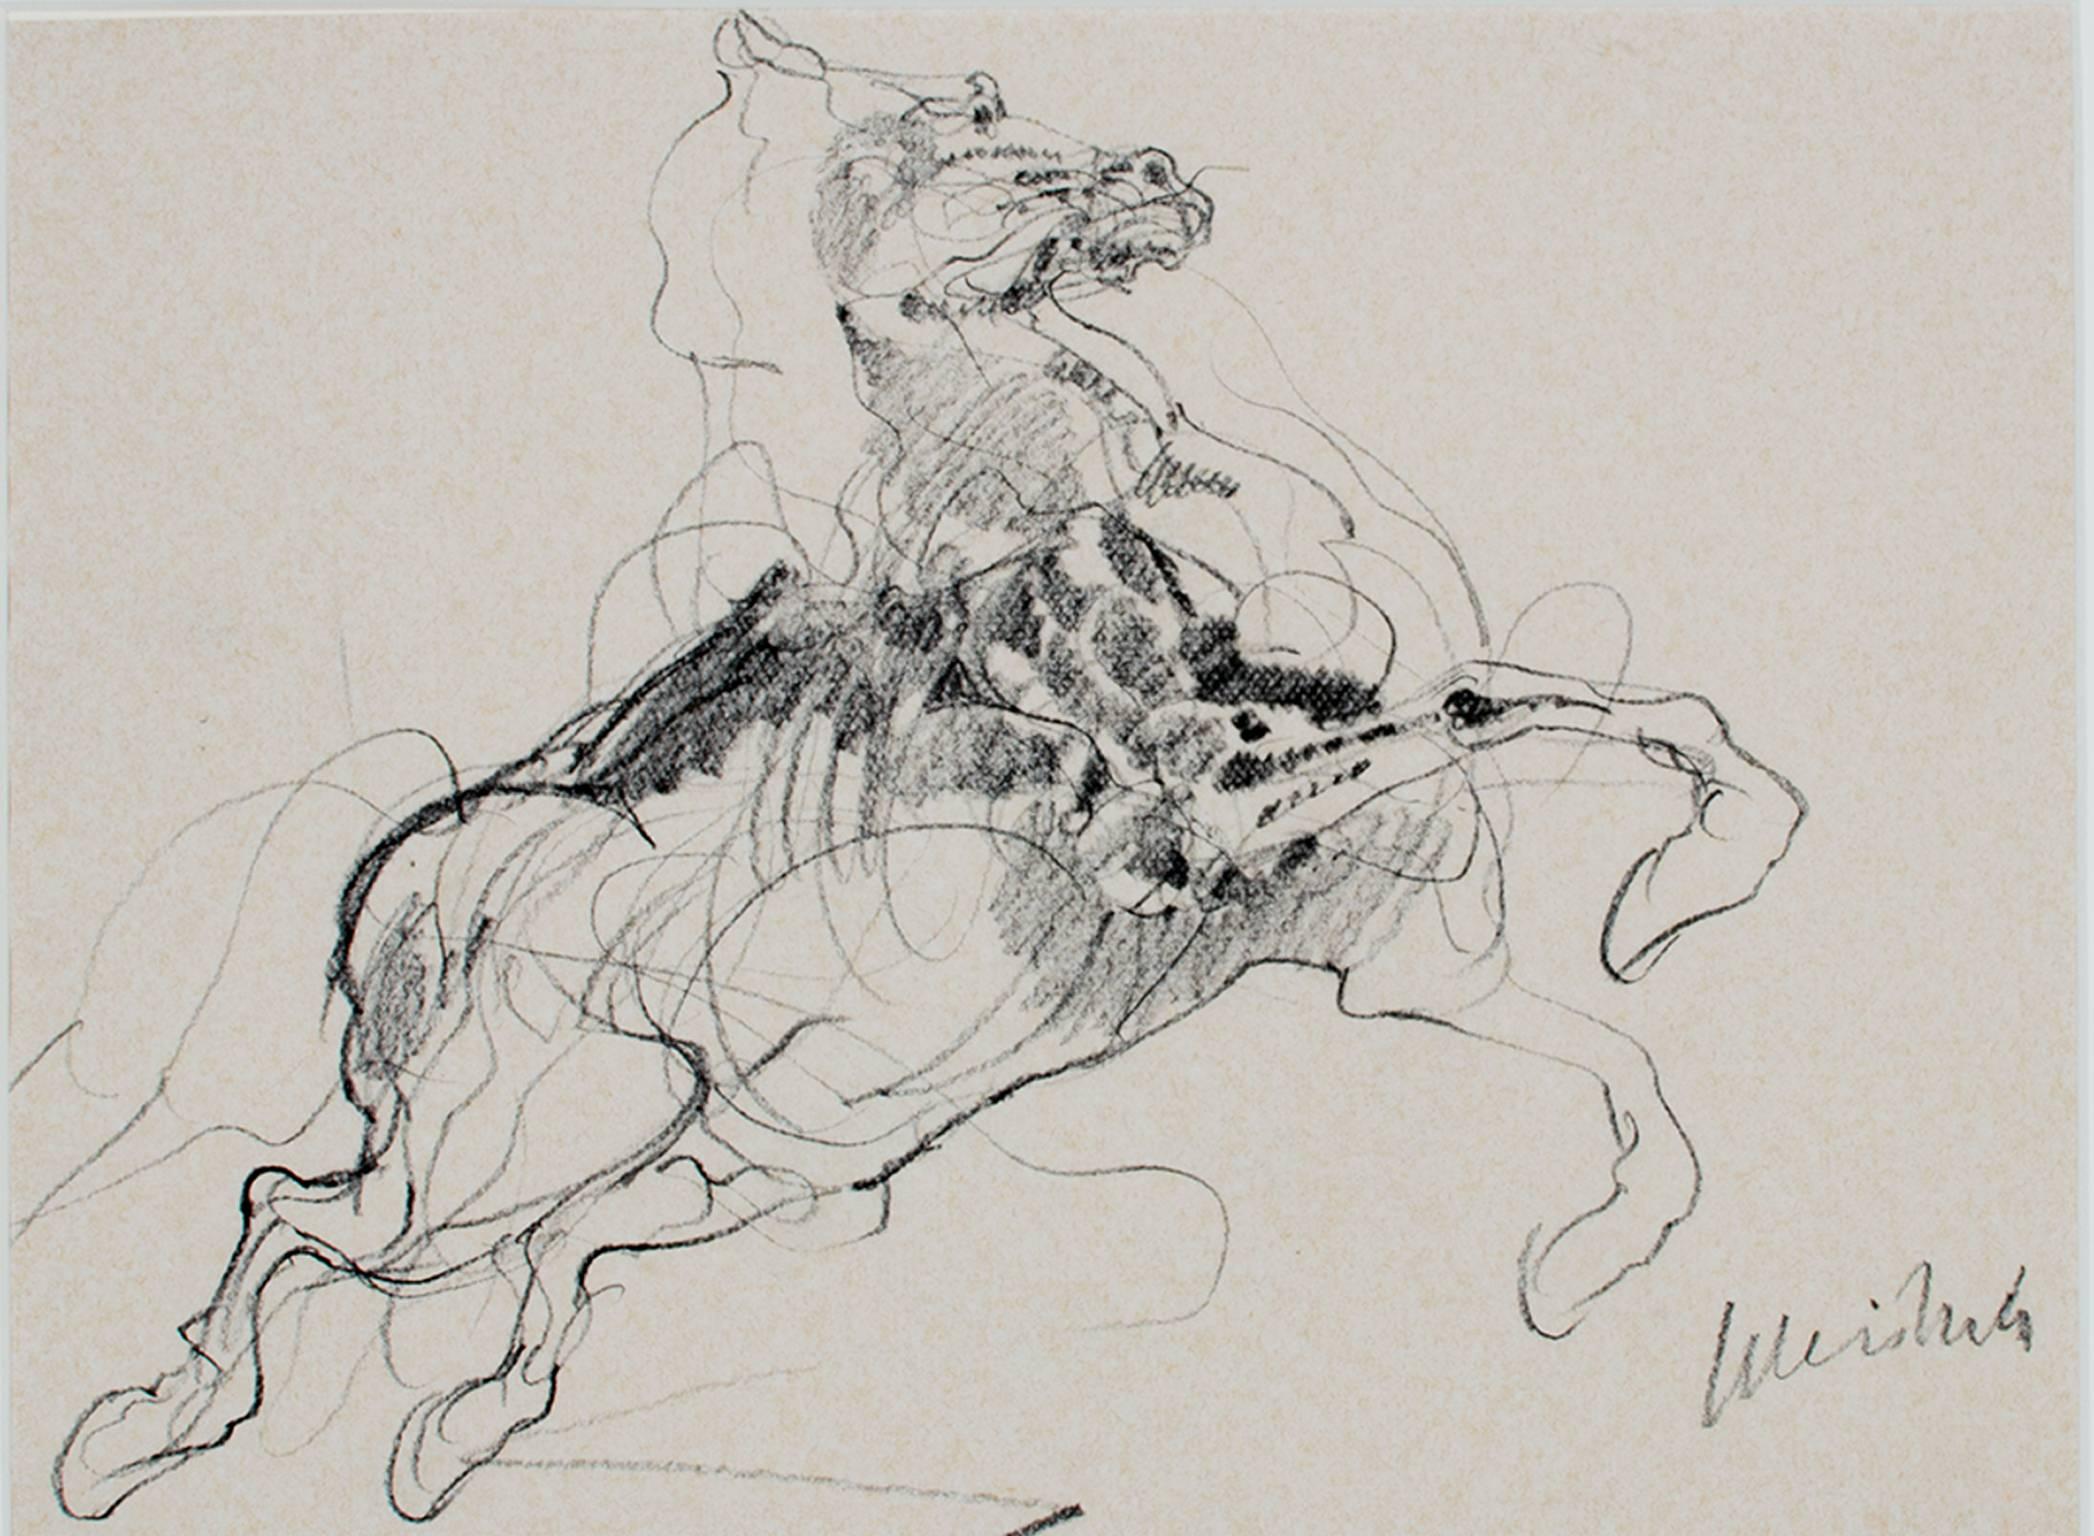 Claude Weisbuch Animal Art - "De La Bataille Vol. 1, Homage a Leonard da Vinci, " signed by Claude Weisbuc